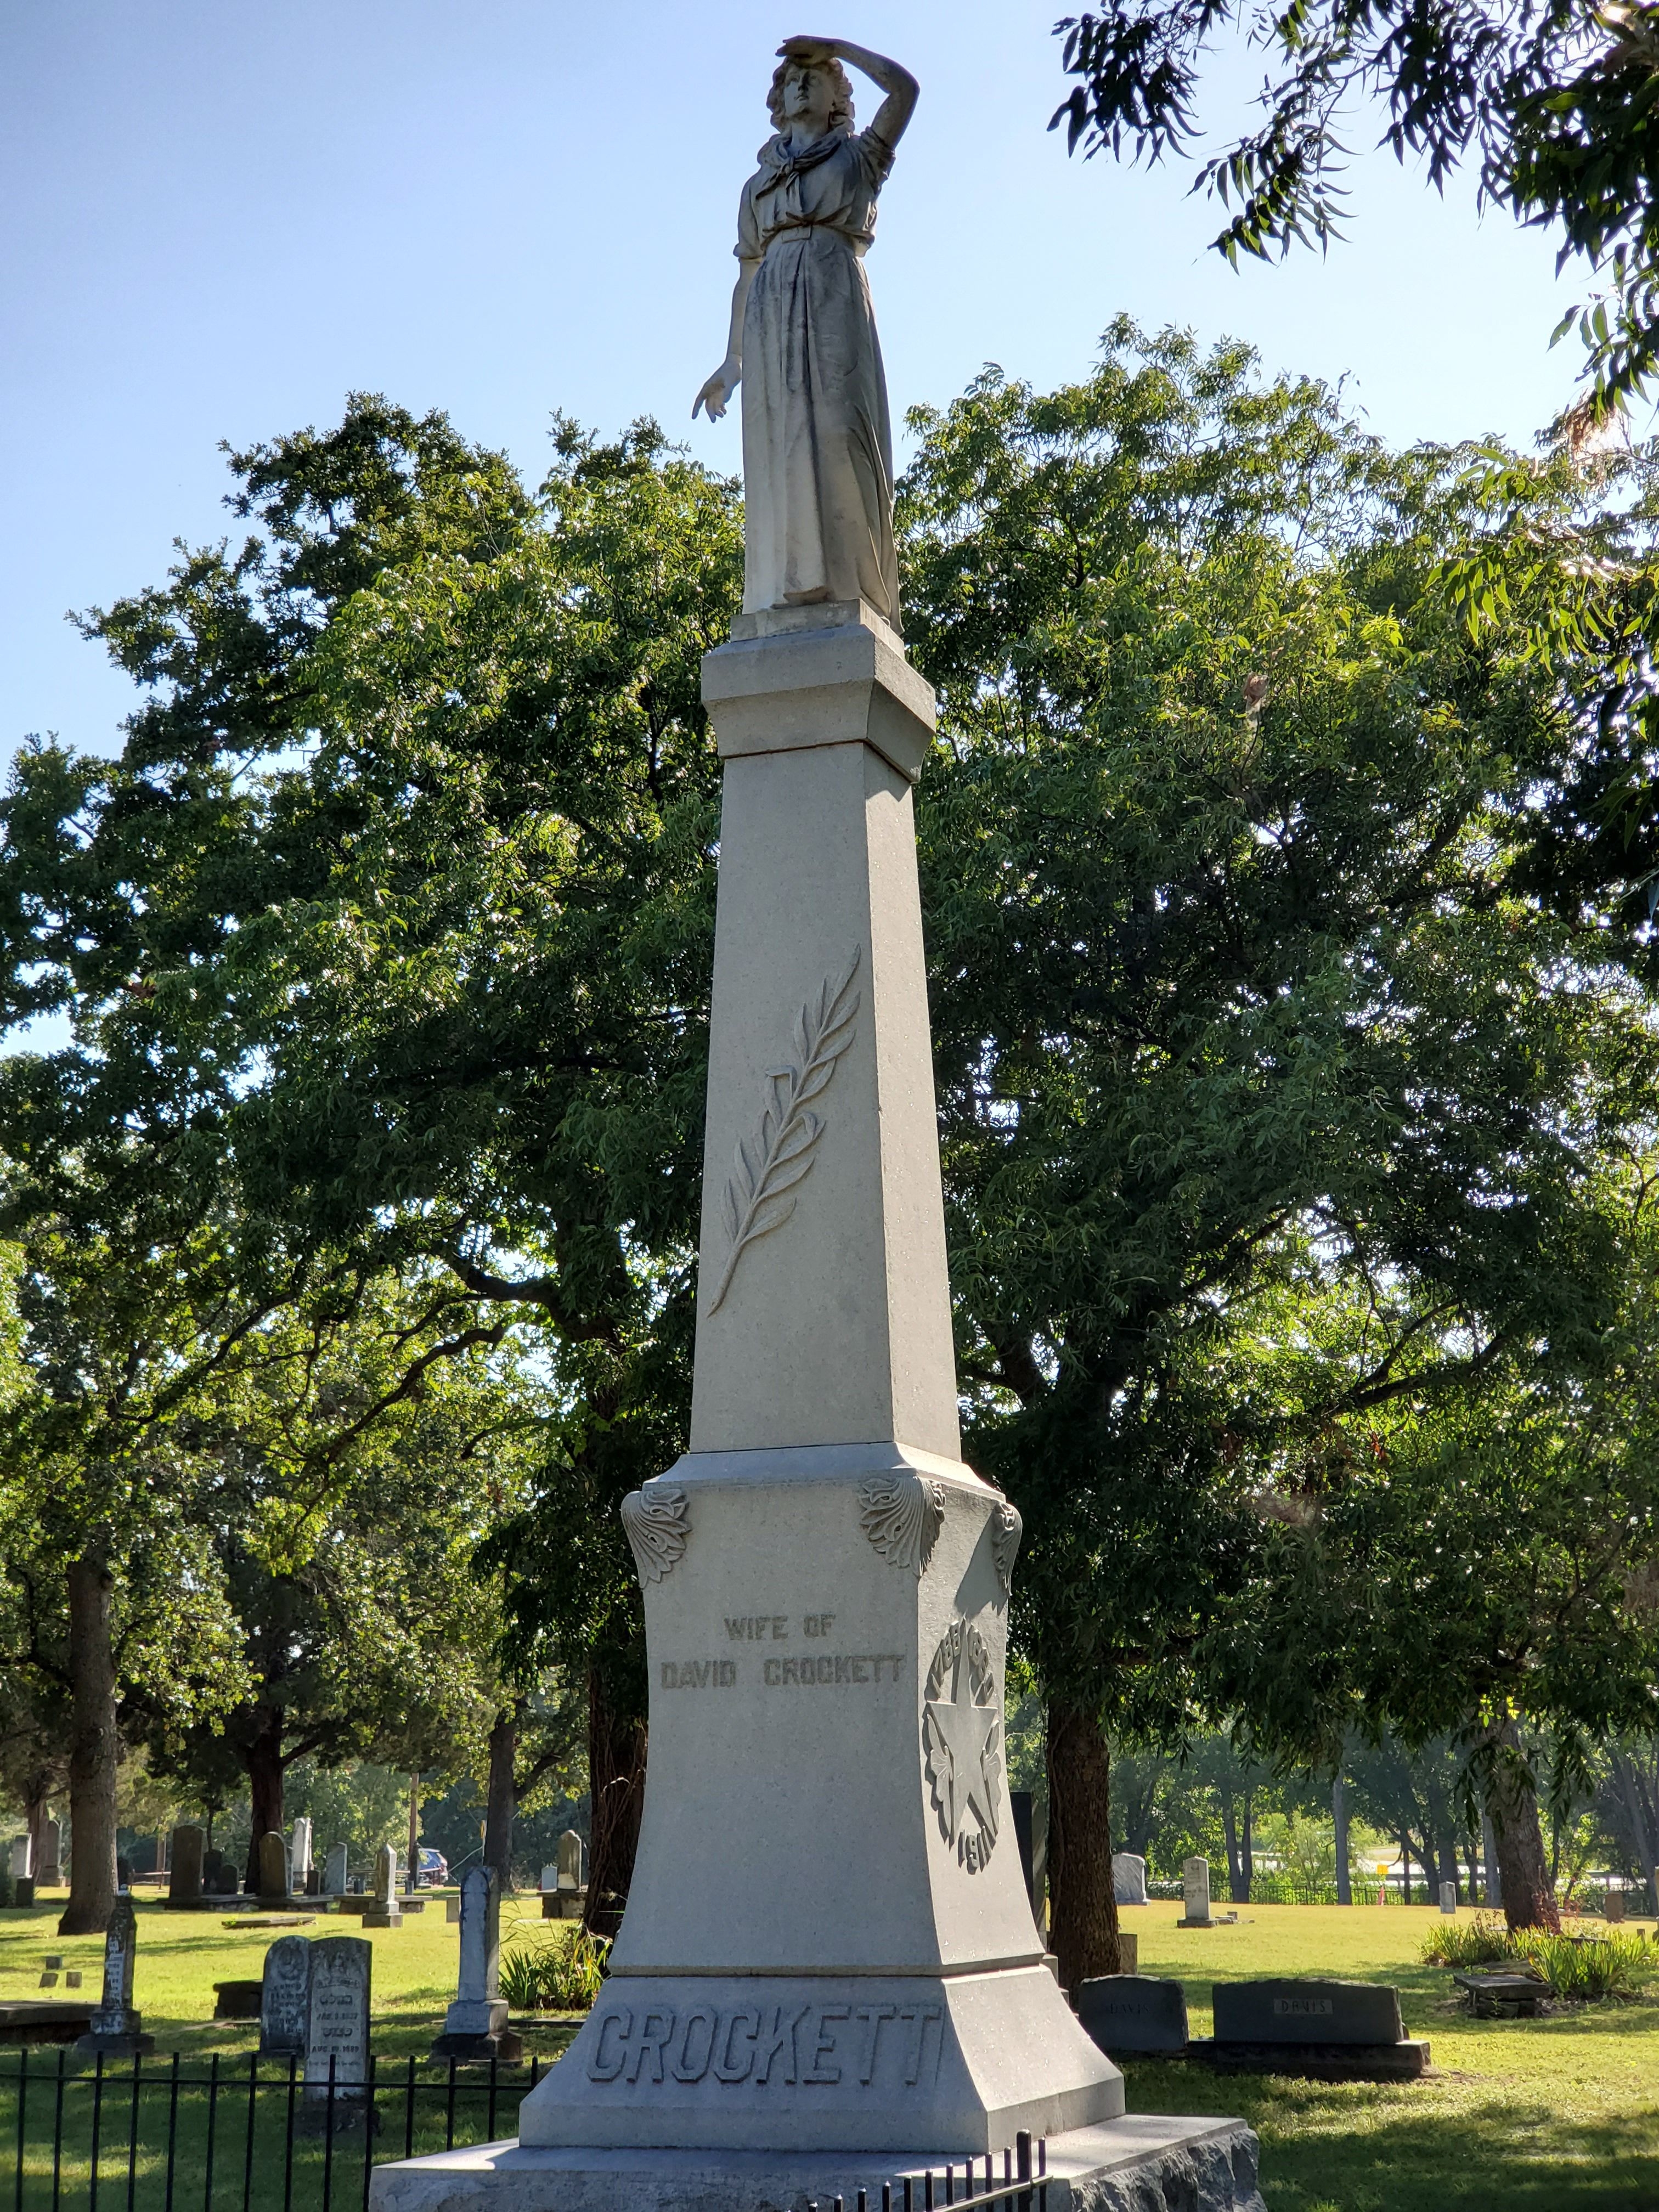 Elizabeth Crockett Monument